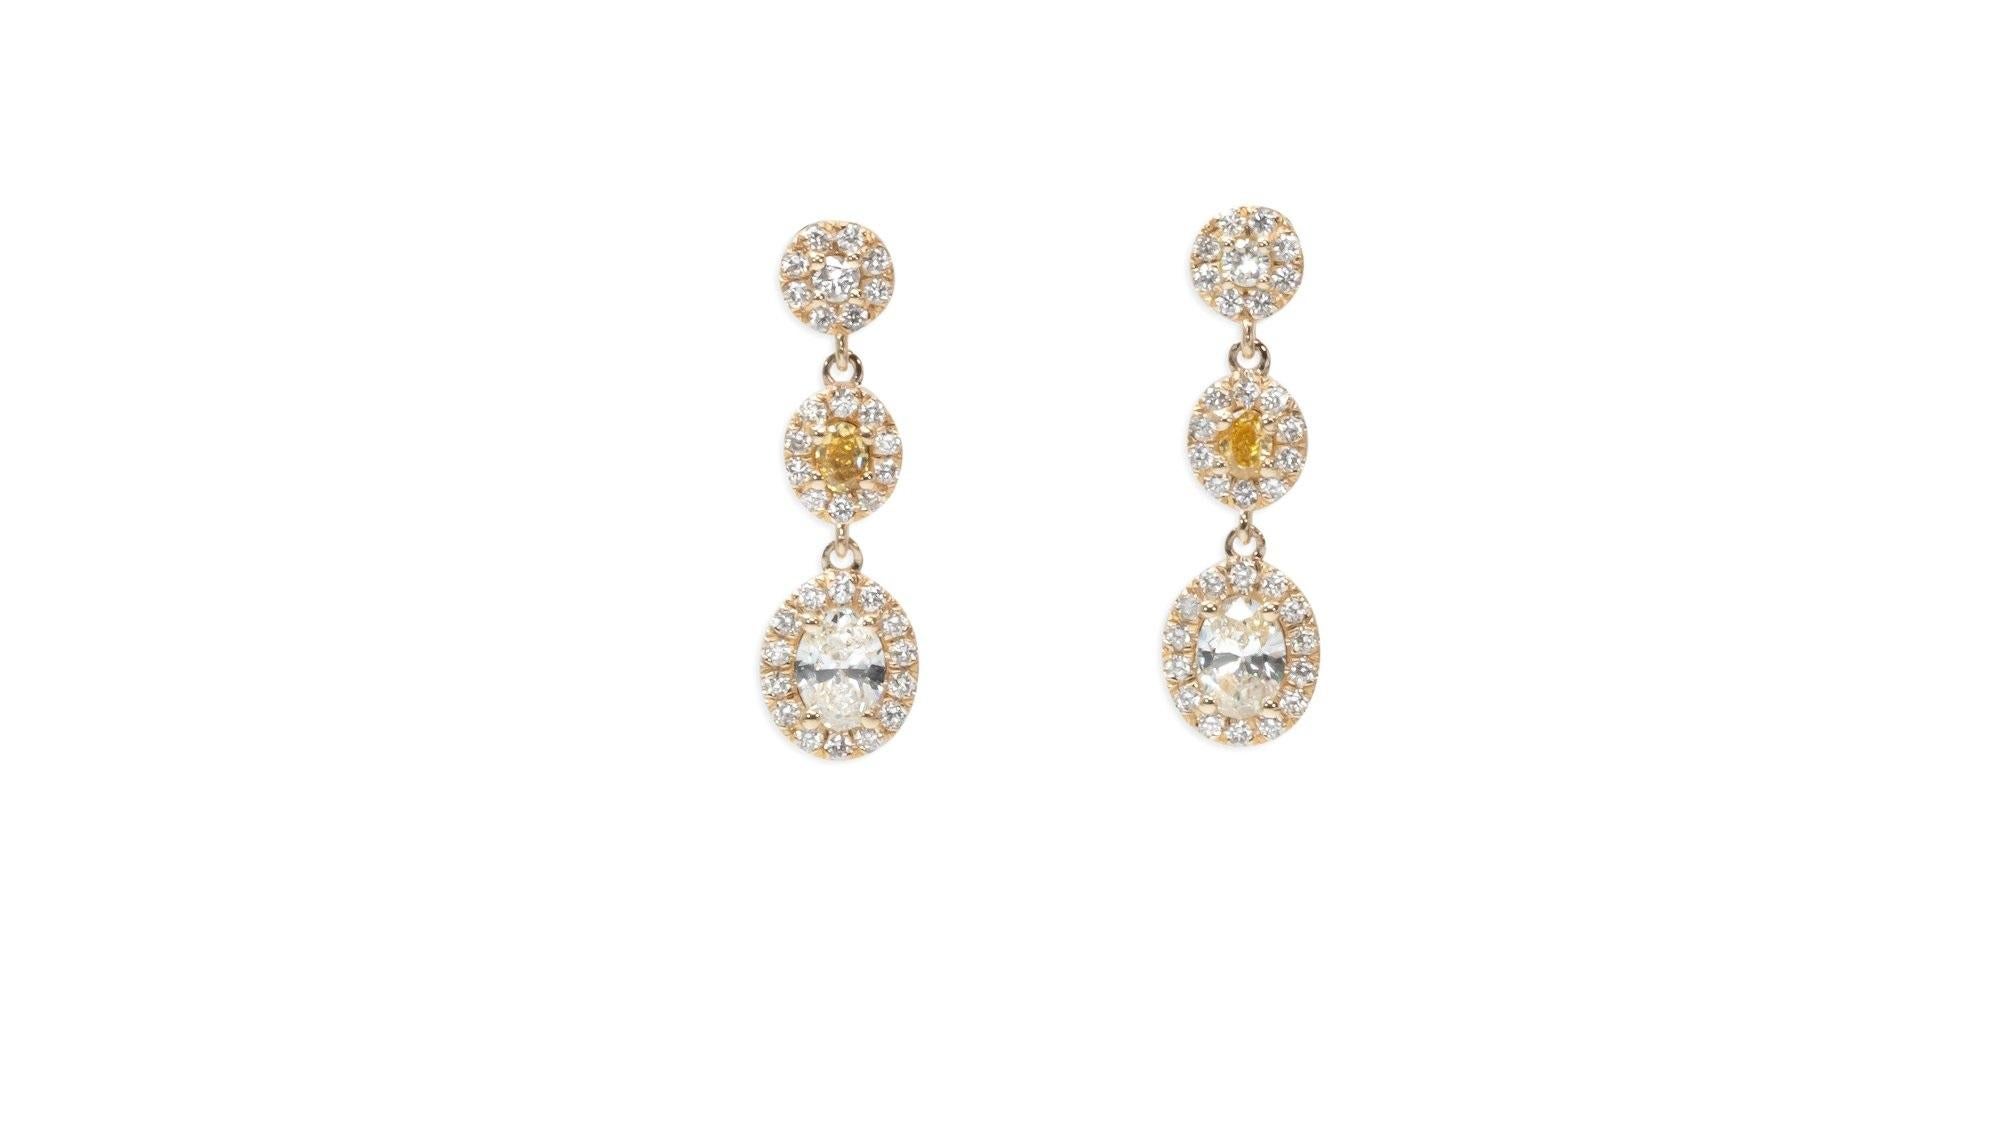 Beautiful 18K Yellow Gold Earrings with 2.22 carat Natural Diamonds- AIG Cert 2